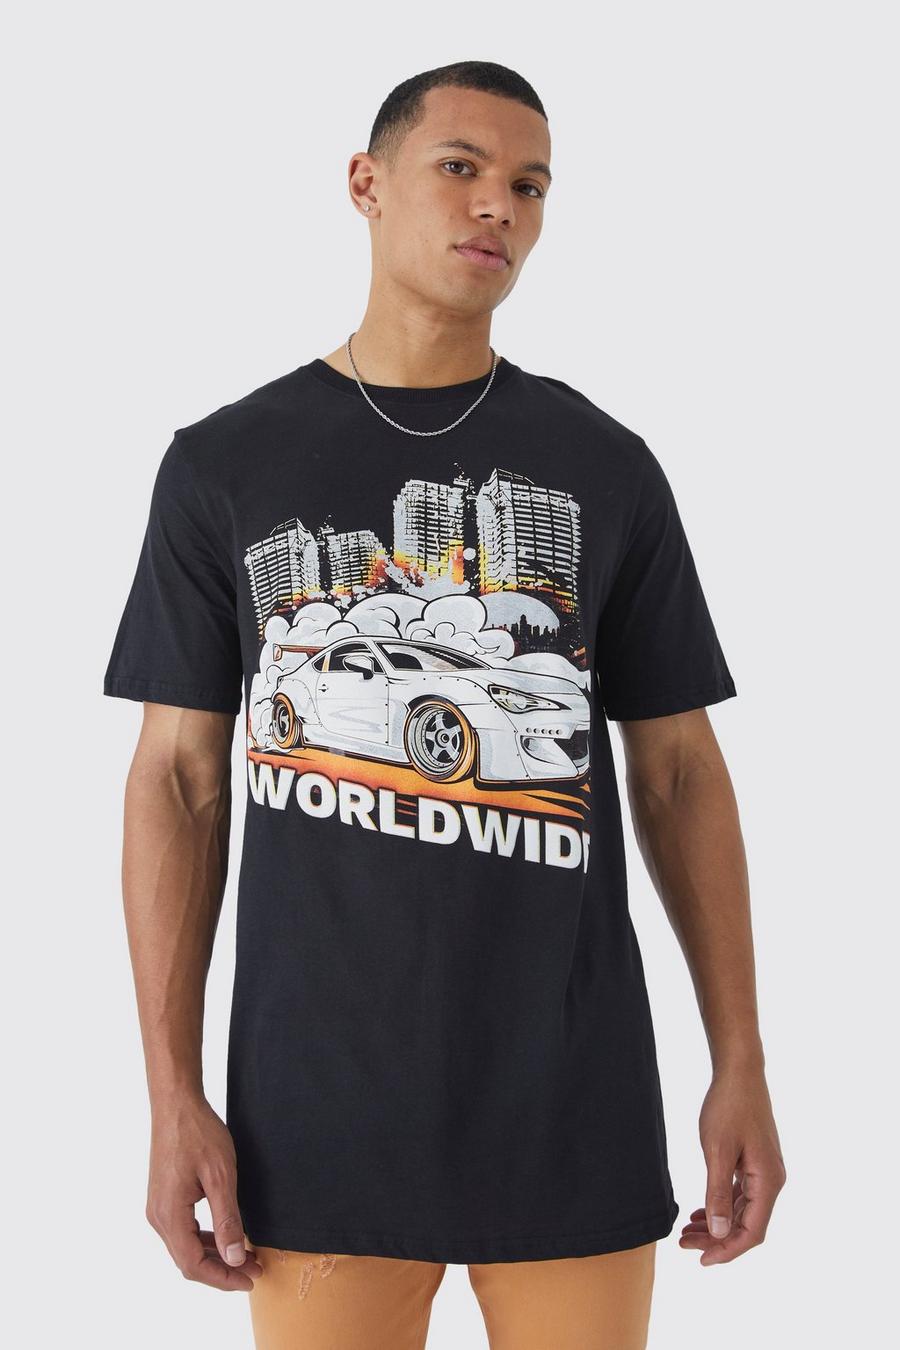 Camiseta Tall larga con estampado gráfico Worldwide de coche, Black